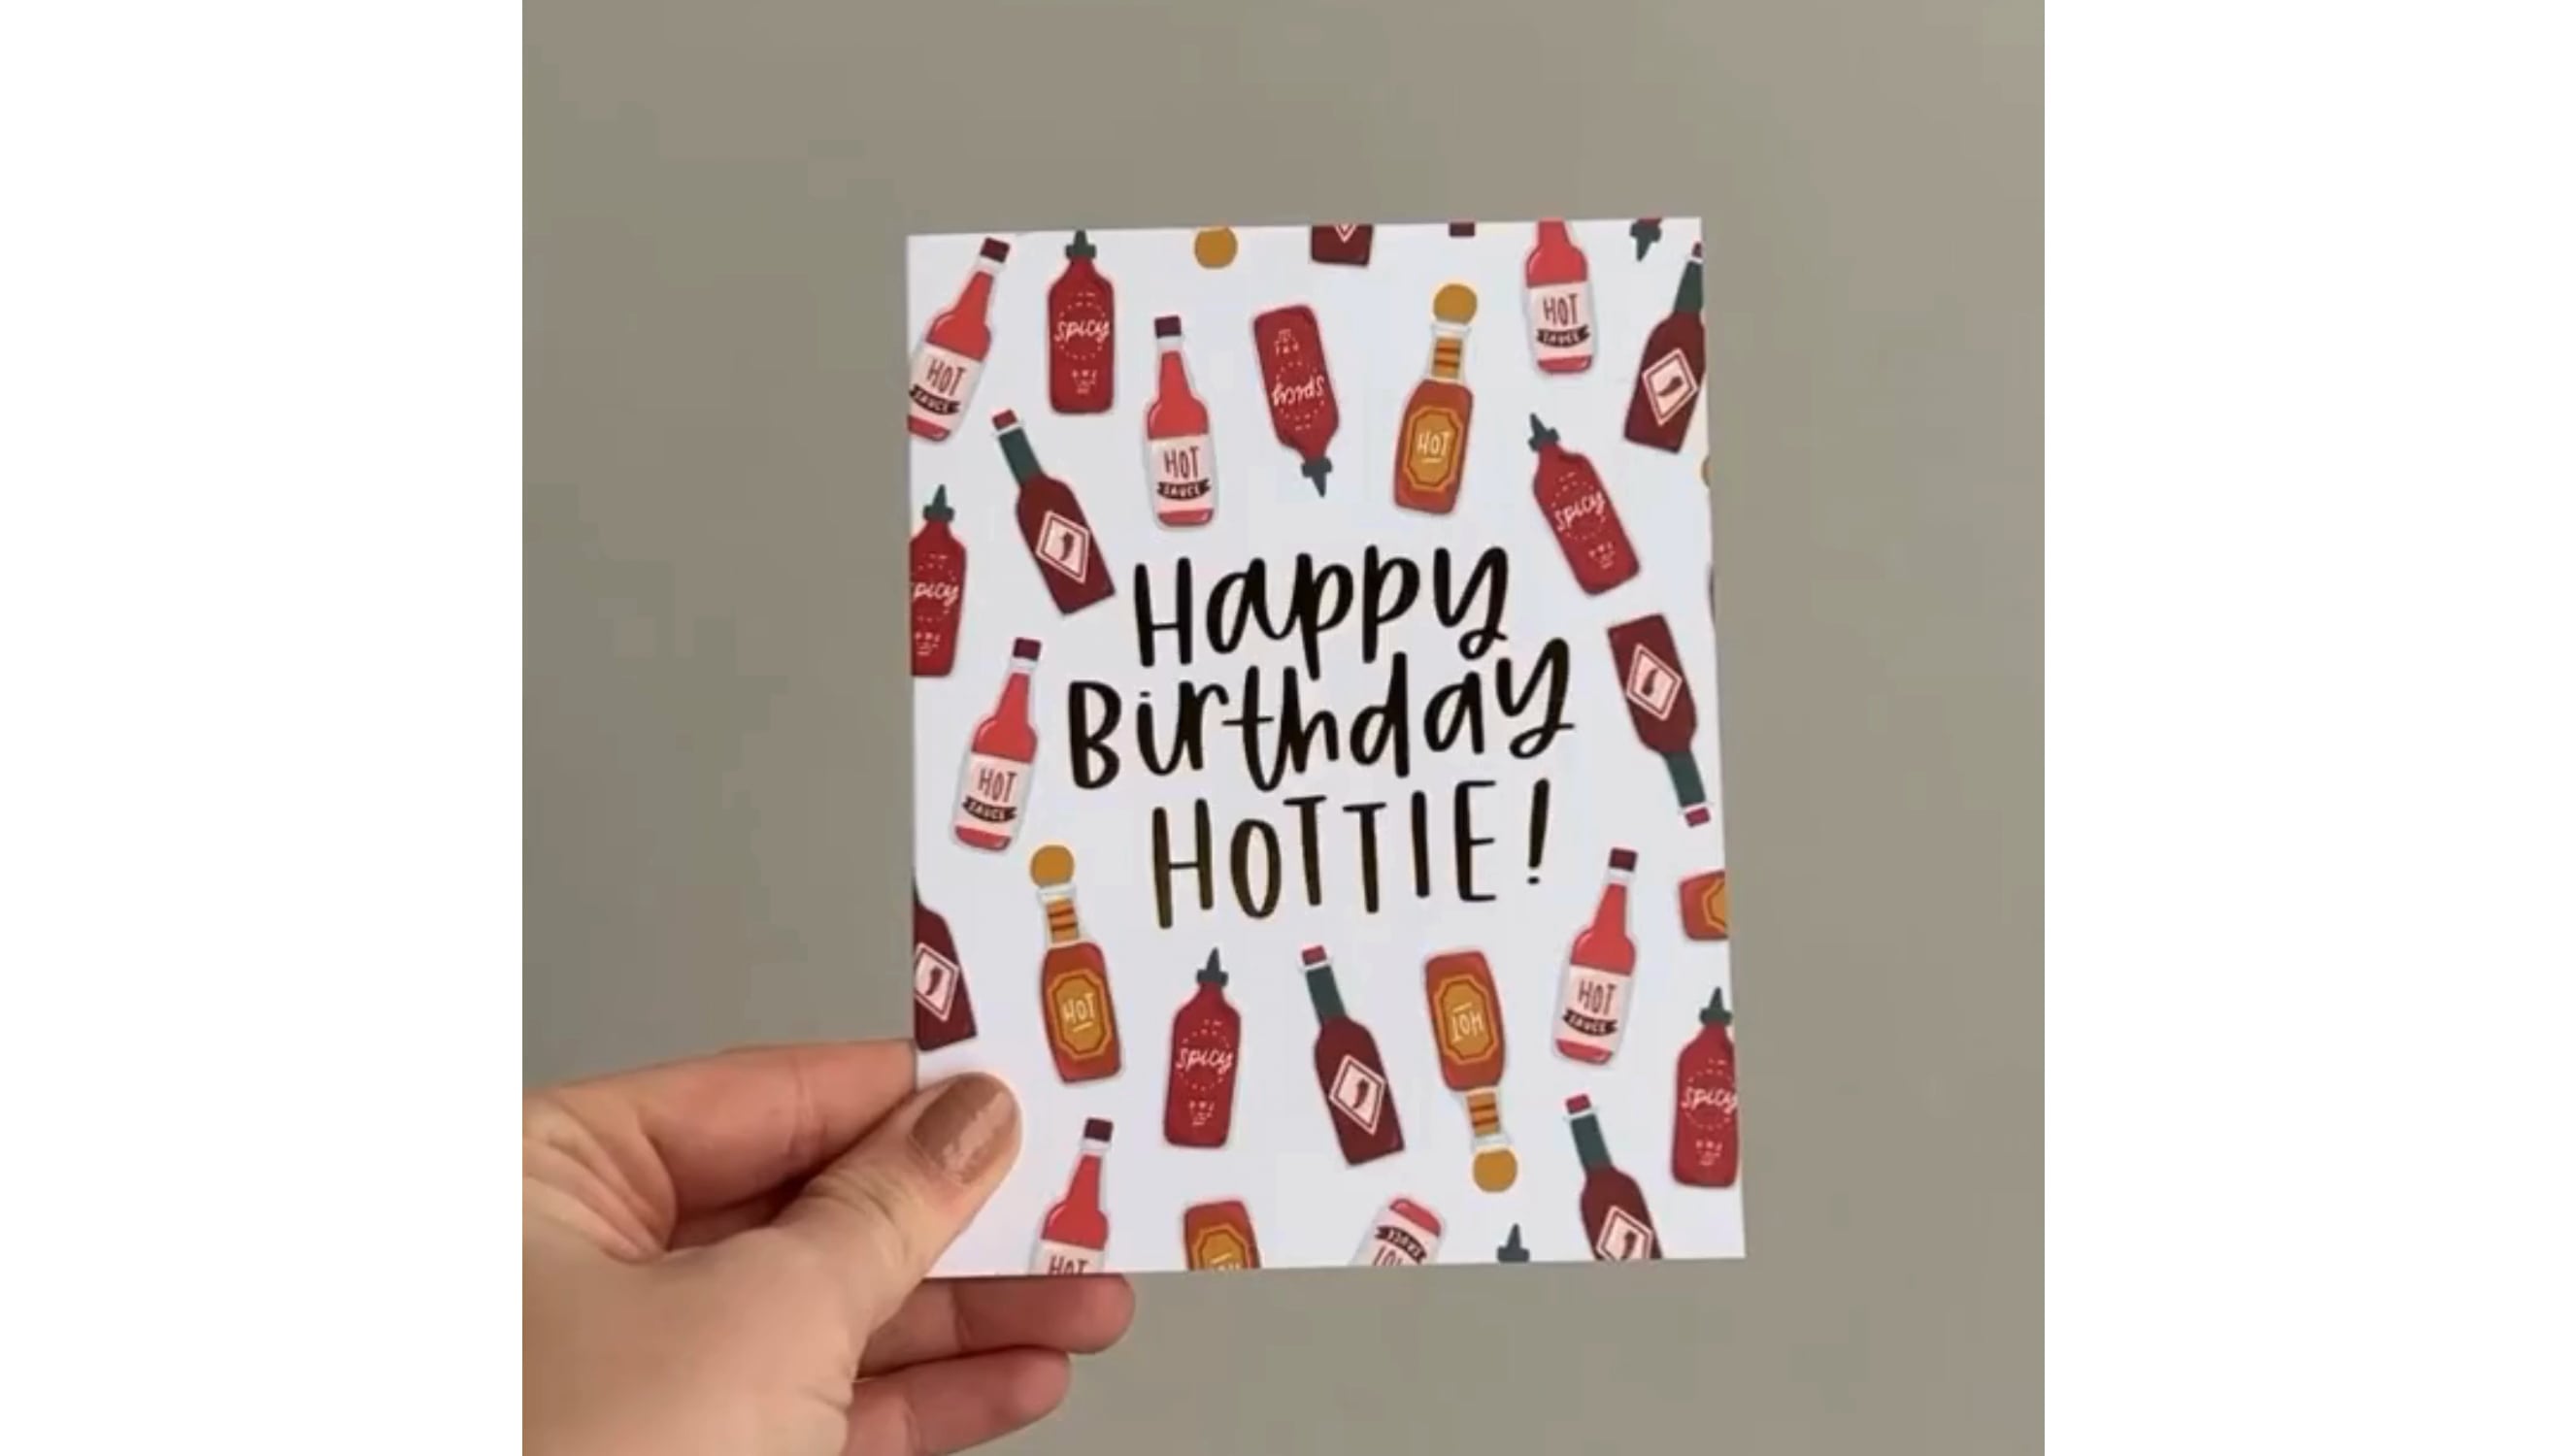 Happy Birthday Hottie Greeting Card video